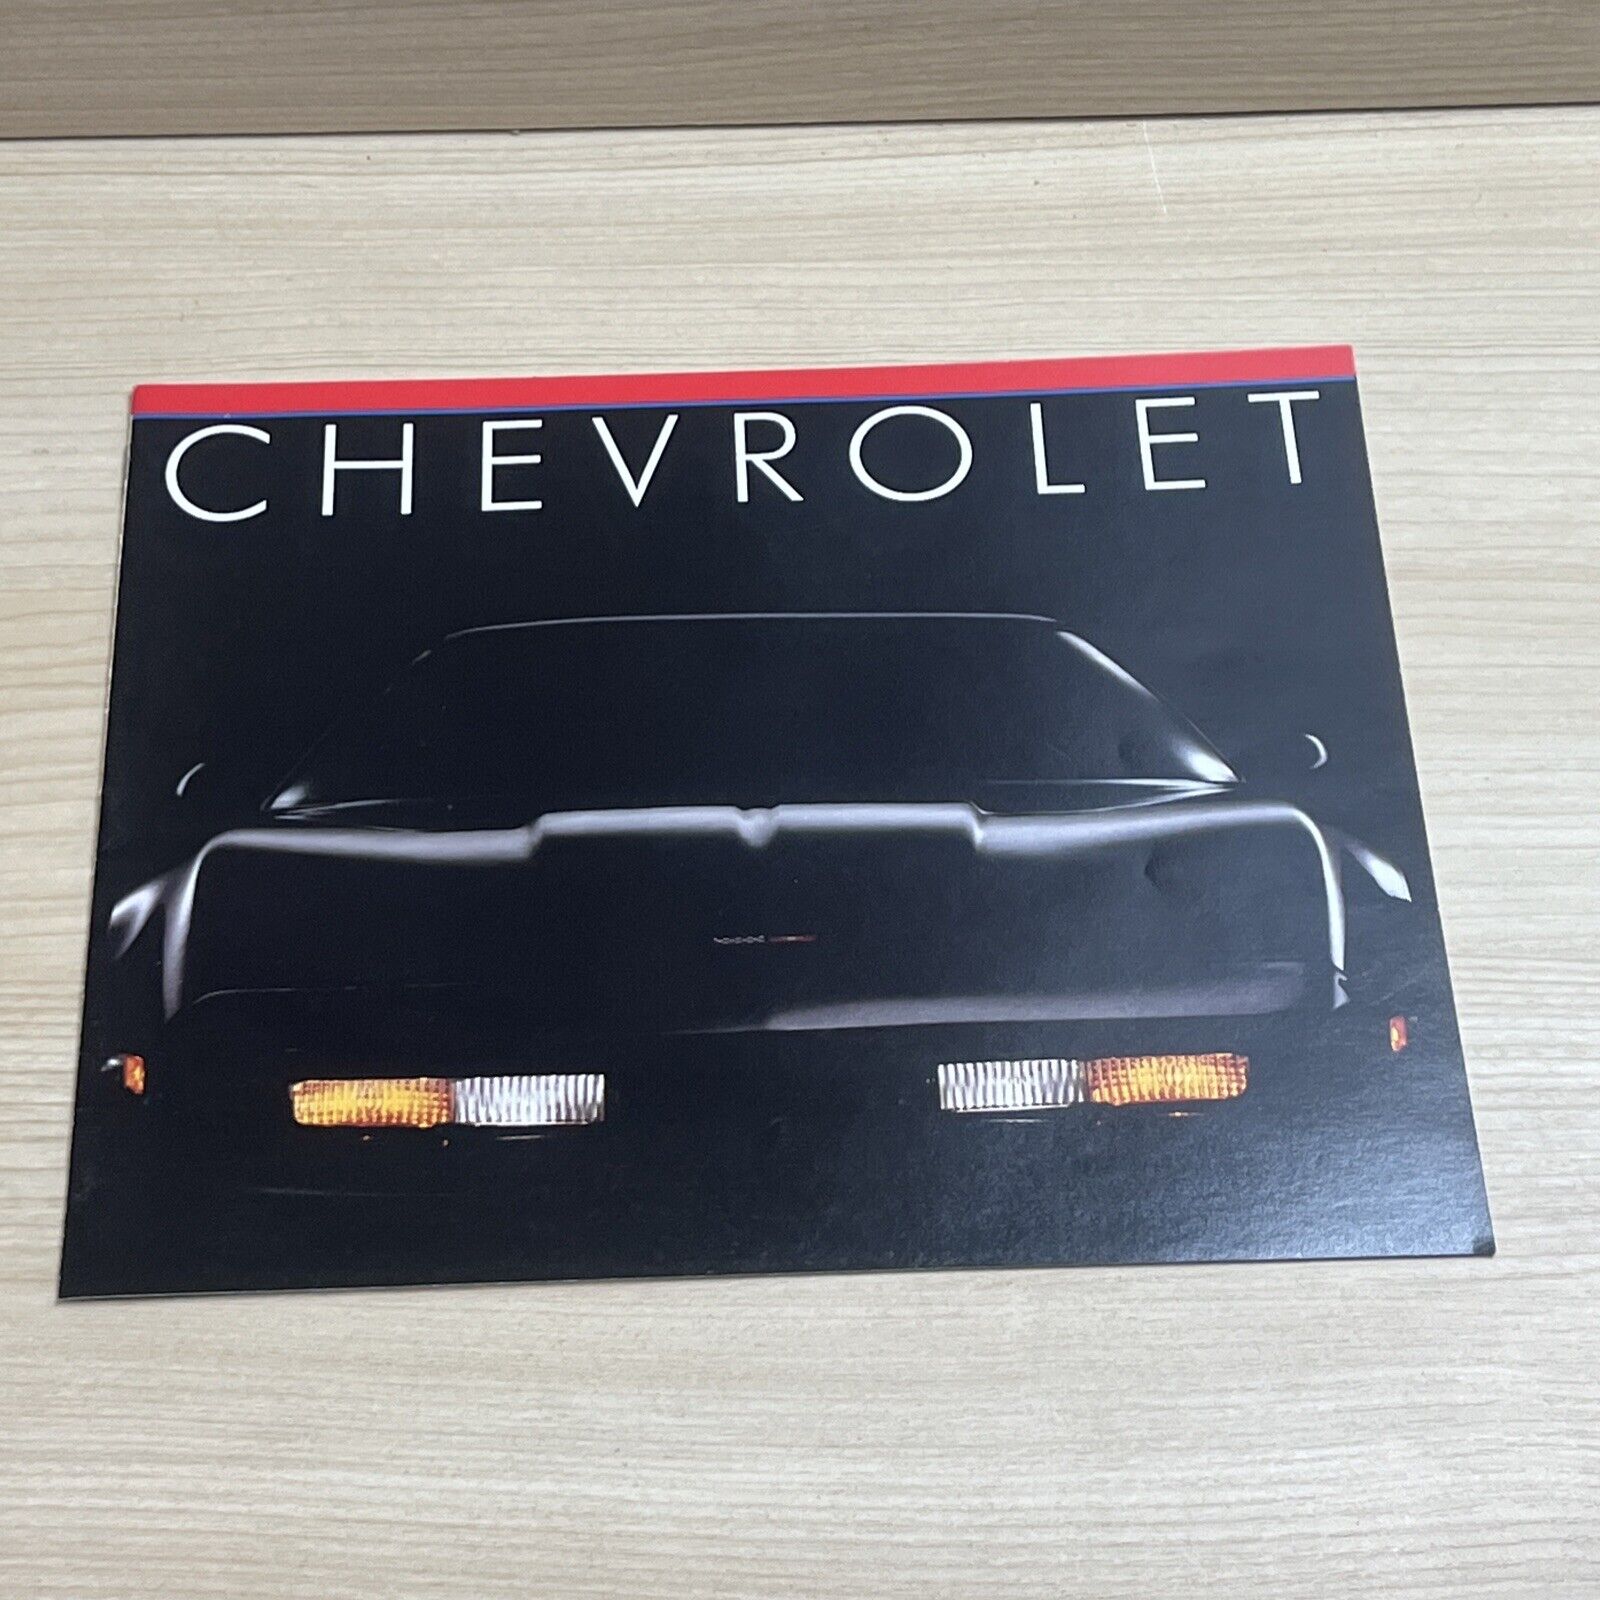 1983 Chevrolet Corvette Cavalier Chevette Citation Dealer Sales Brochure Catalog